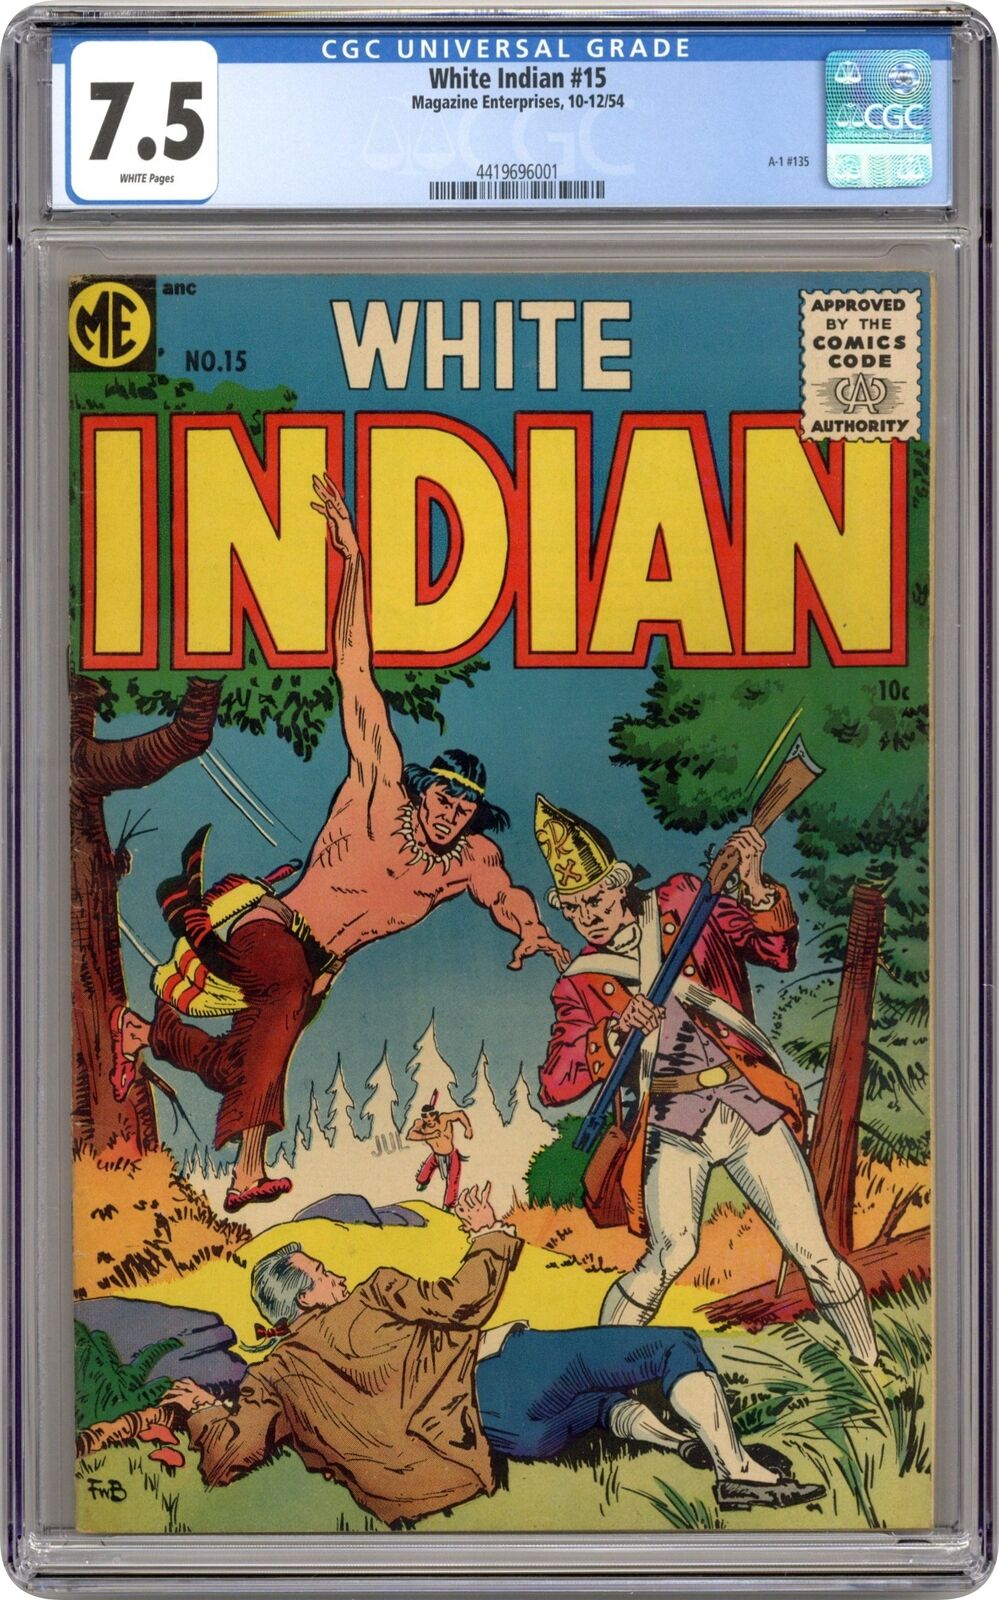 White Indian #15 CGC 7.5 1954 4419696001